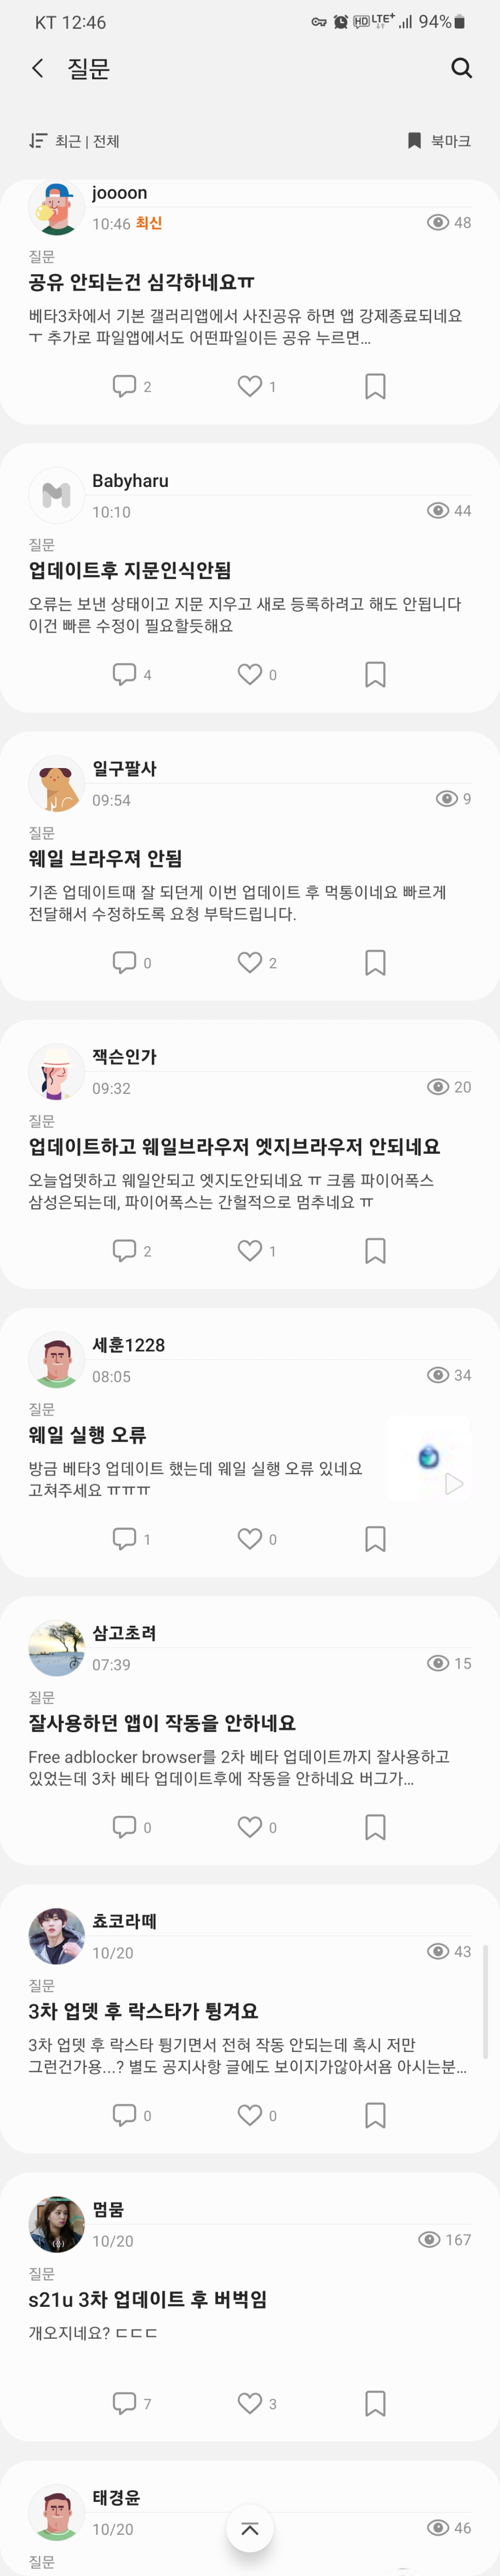 Screenshot_20211021-124635_Samsung Members.jpg